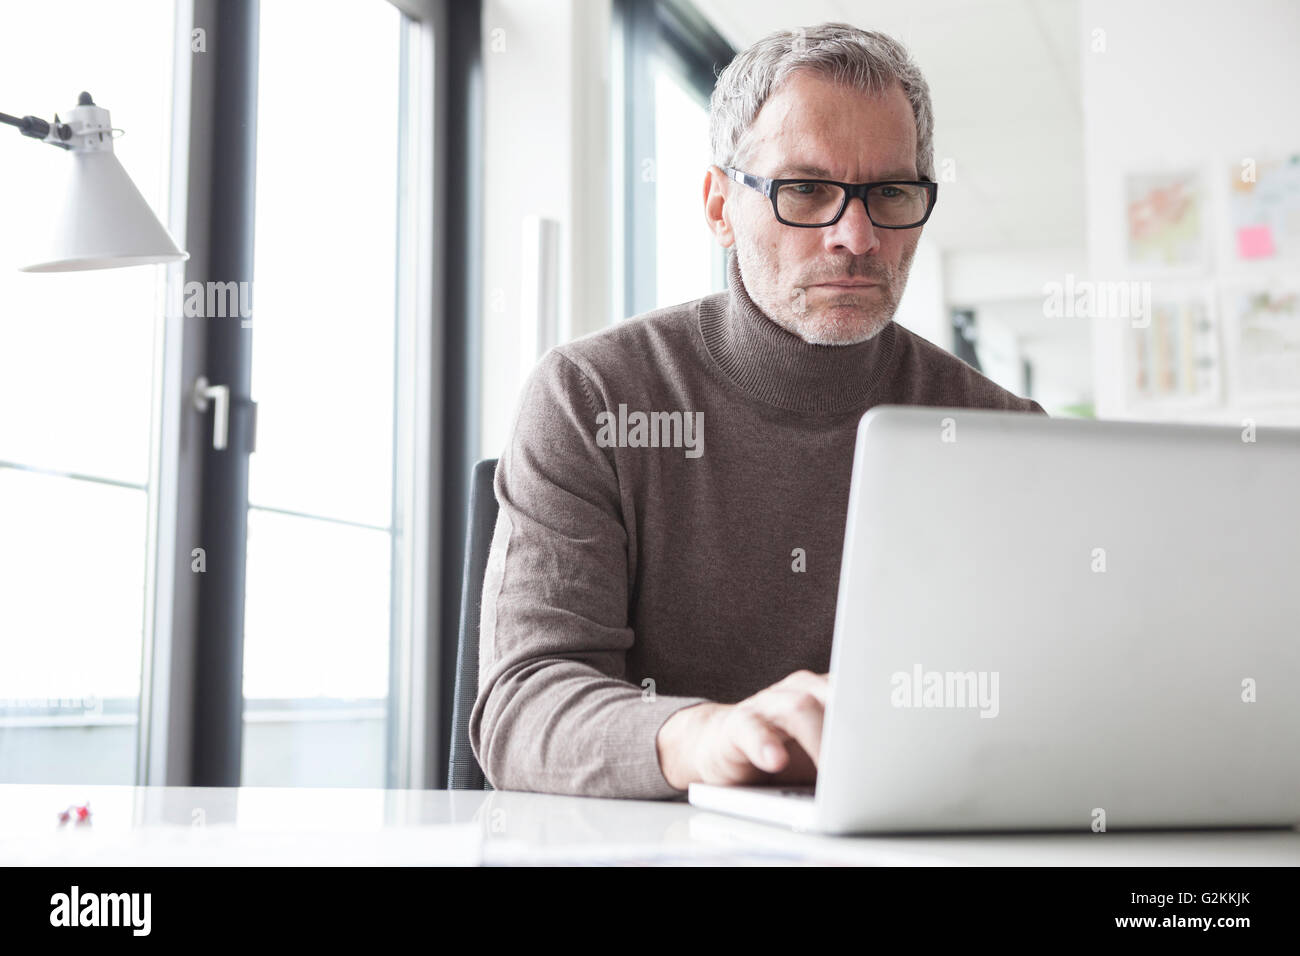 Mature man sitting in office using laptop Stock Photo